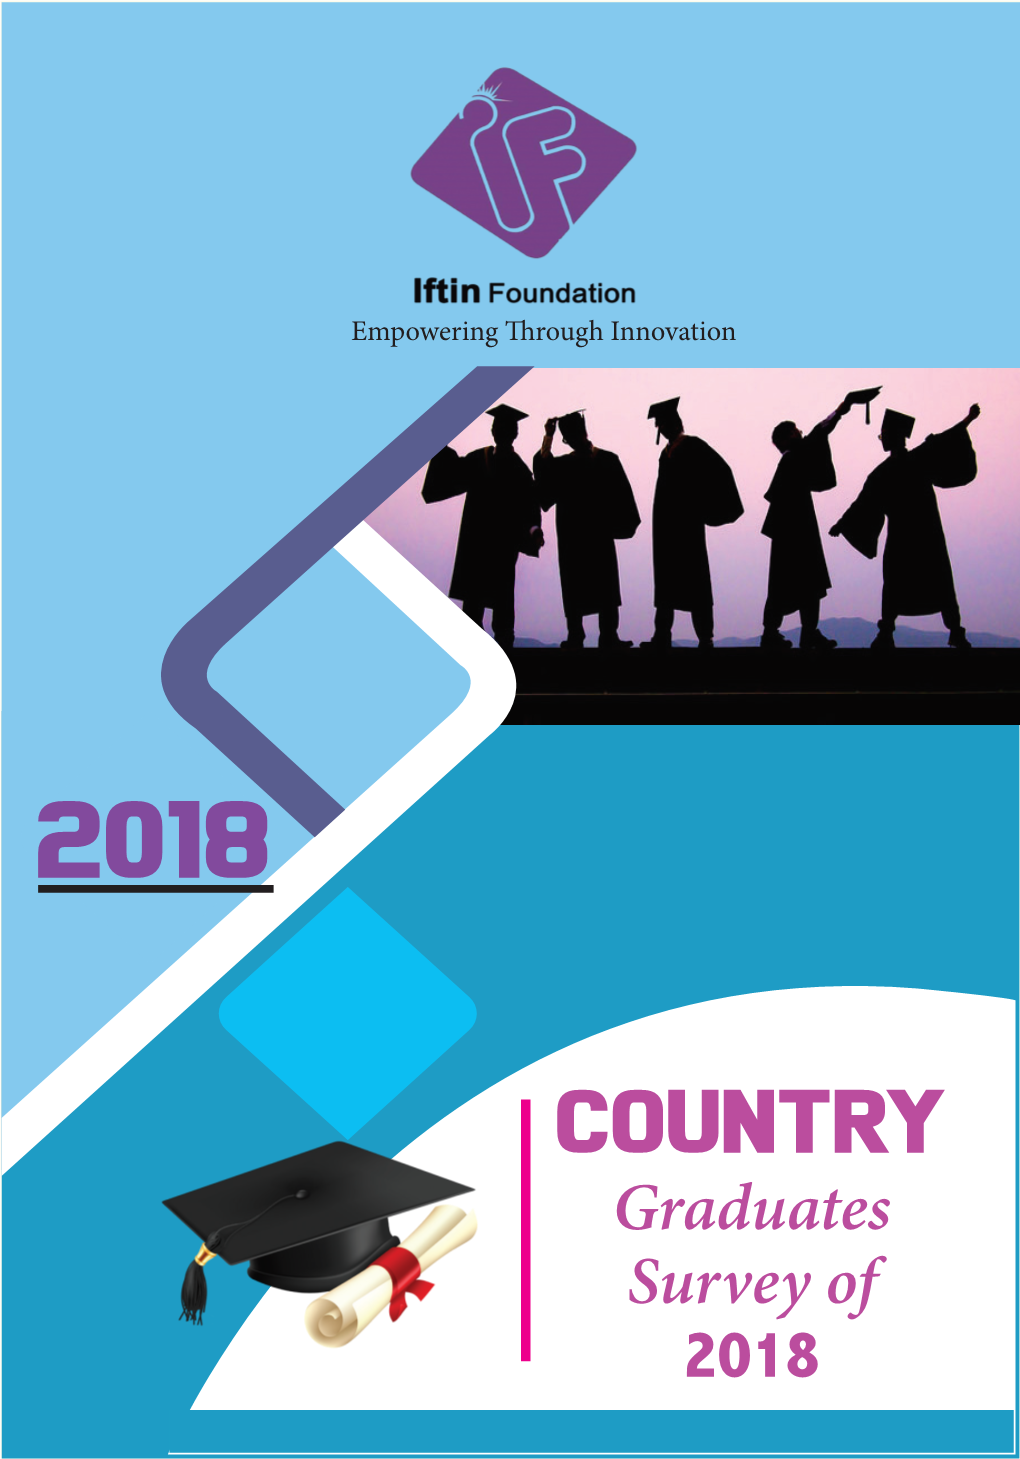 COUNTRY Graduates Survey of 1 2018 Iftin Foundation Maka Almukarama Rd